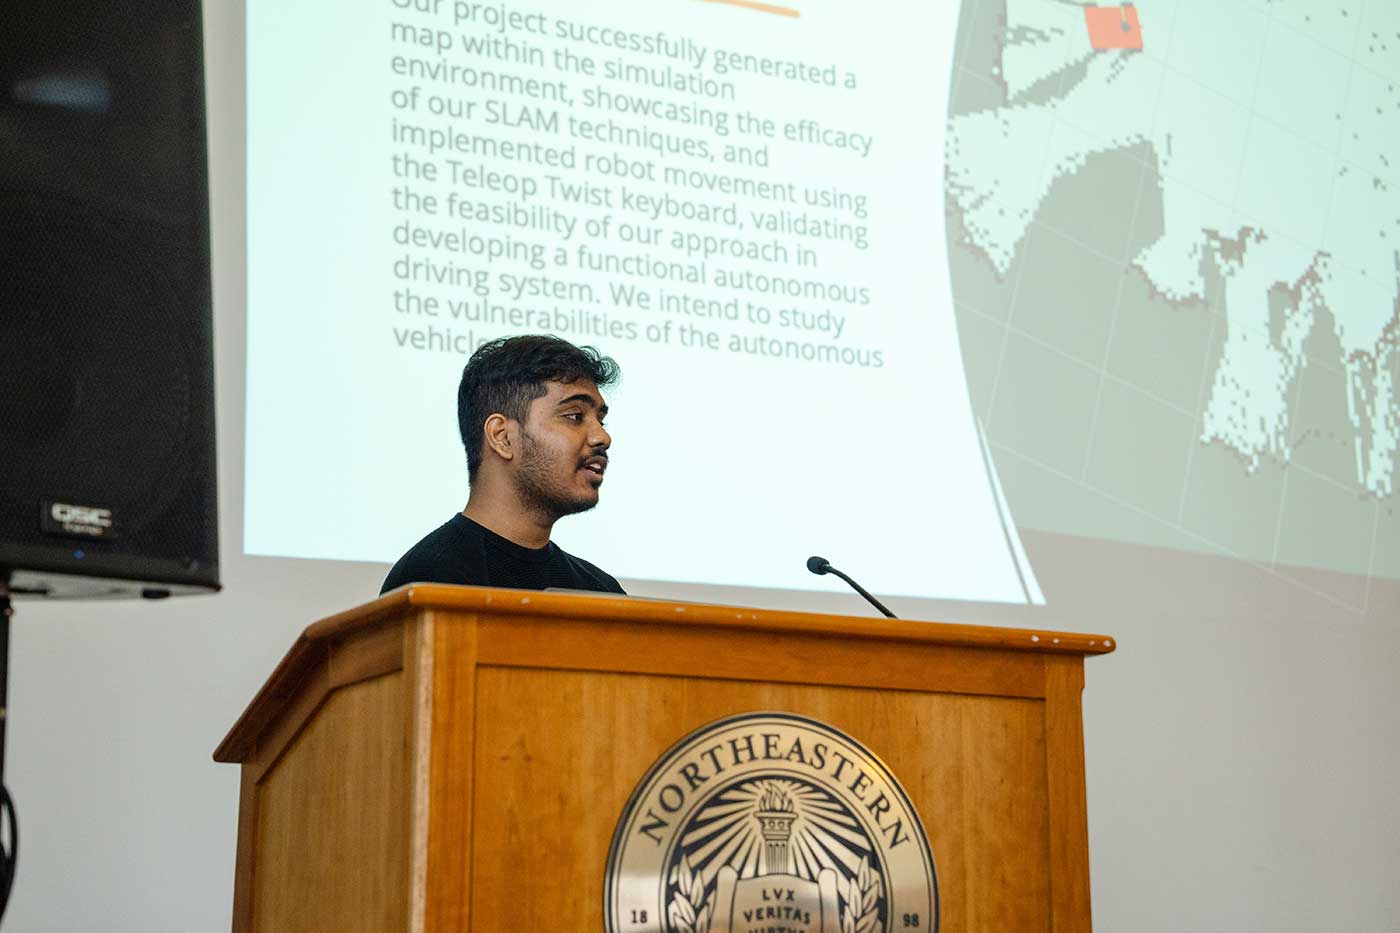 Kaushik Boora presents research at a podium